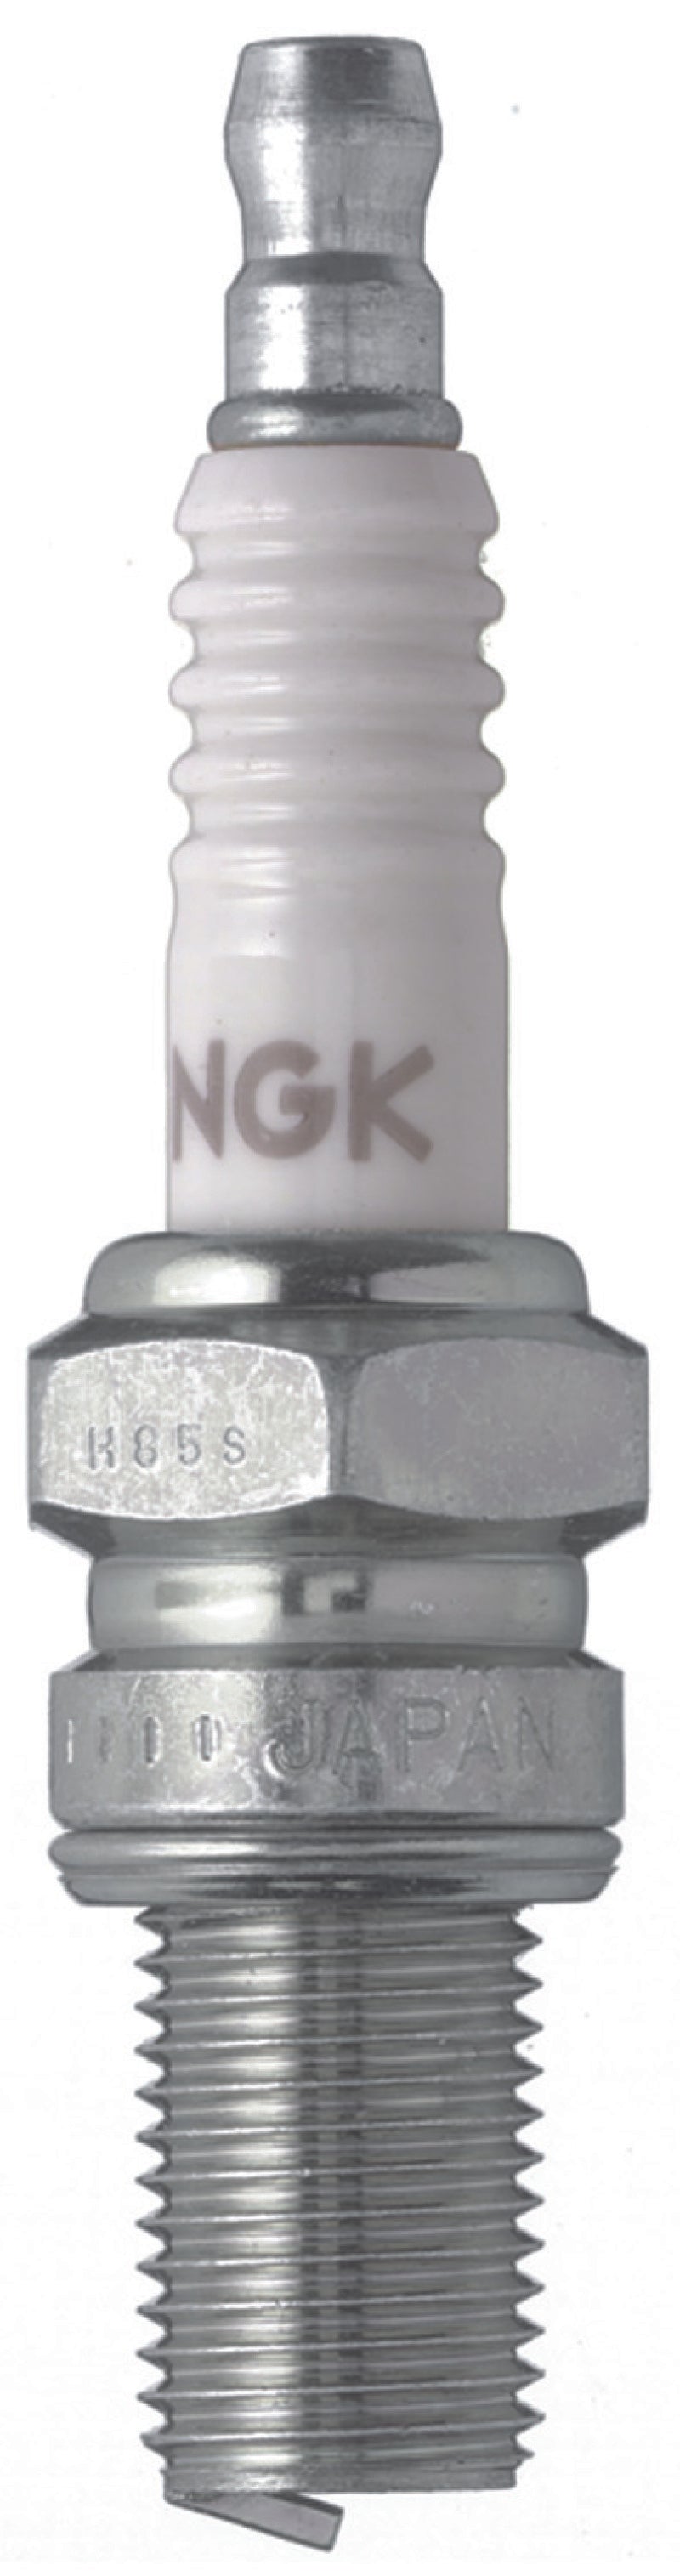 NGK Racing Spark Plugs Platinum Box of 4 (R2525-10)